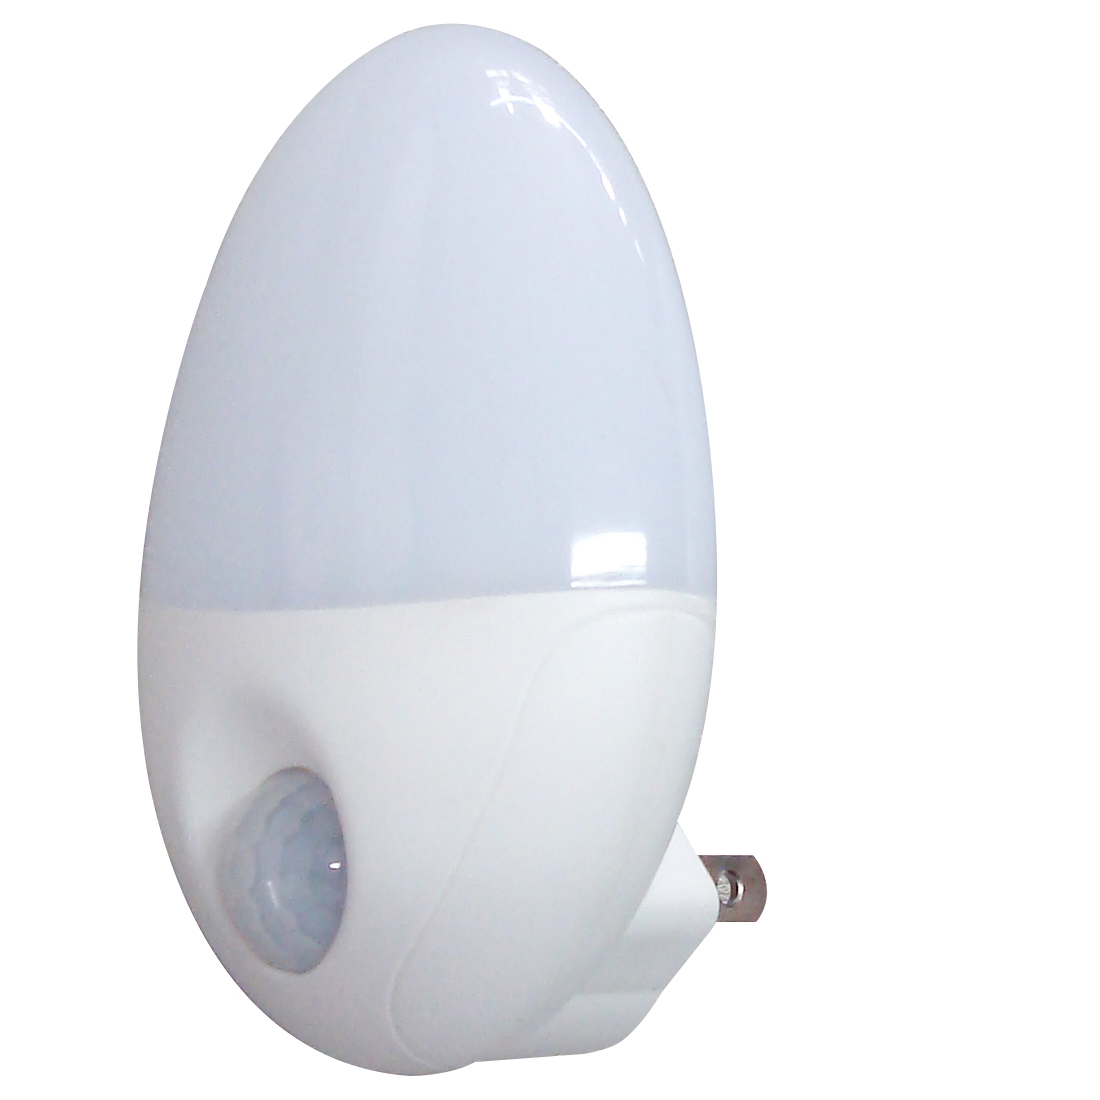 XS-008-US-Plug-2W-110V-Infrared-Human-Body-Induction-Lamp-Plug-in-PIR-Motion-Sensor-Night-Light-1789424-3